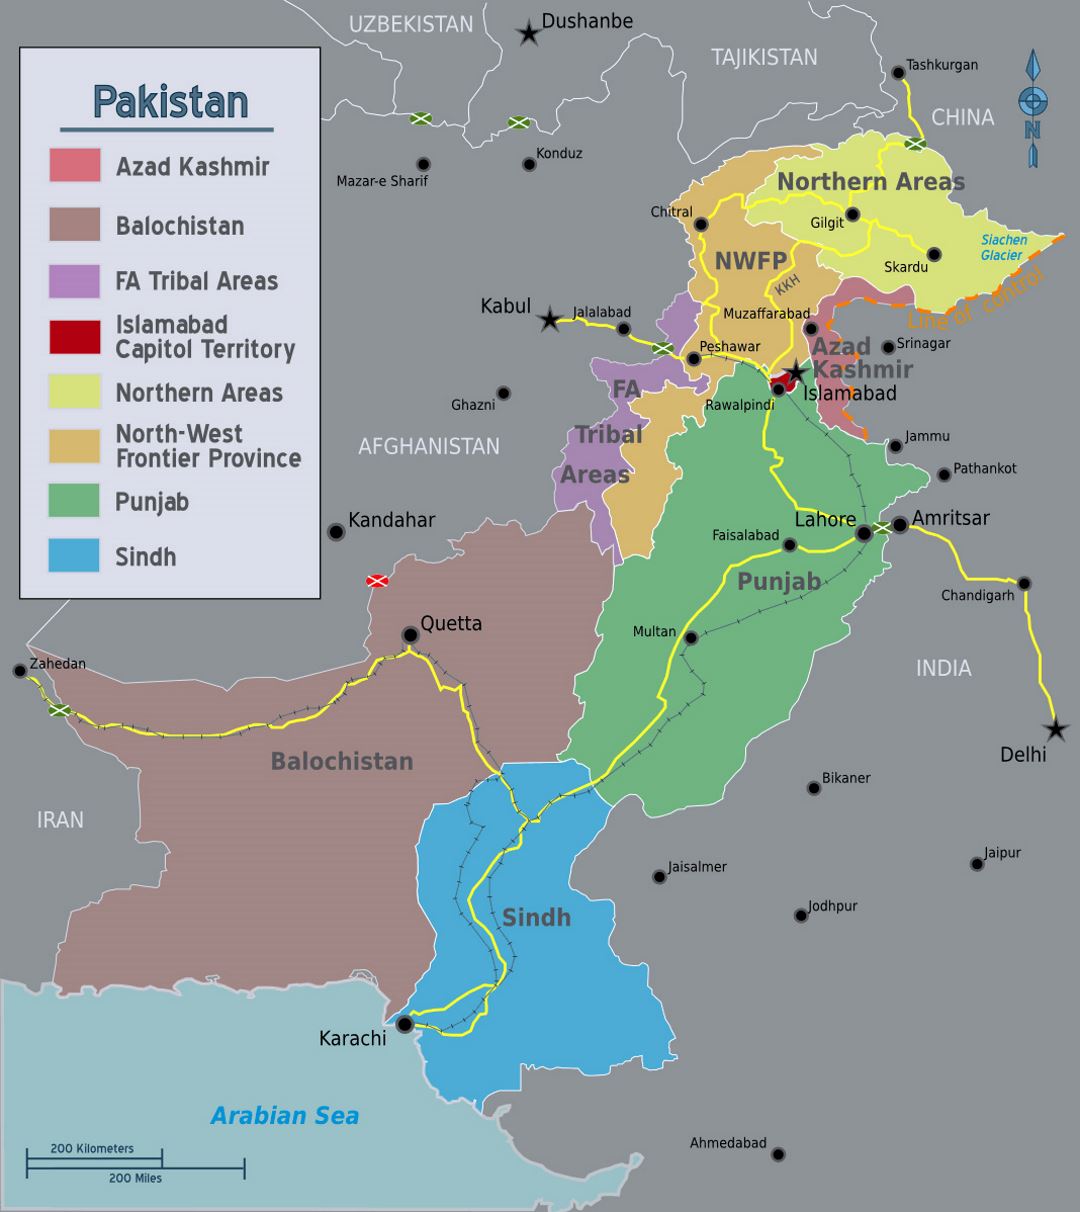 Detailed regions map of Pakistan